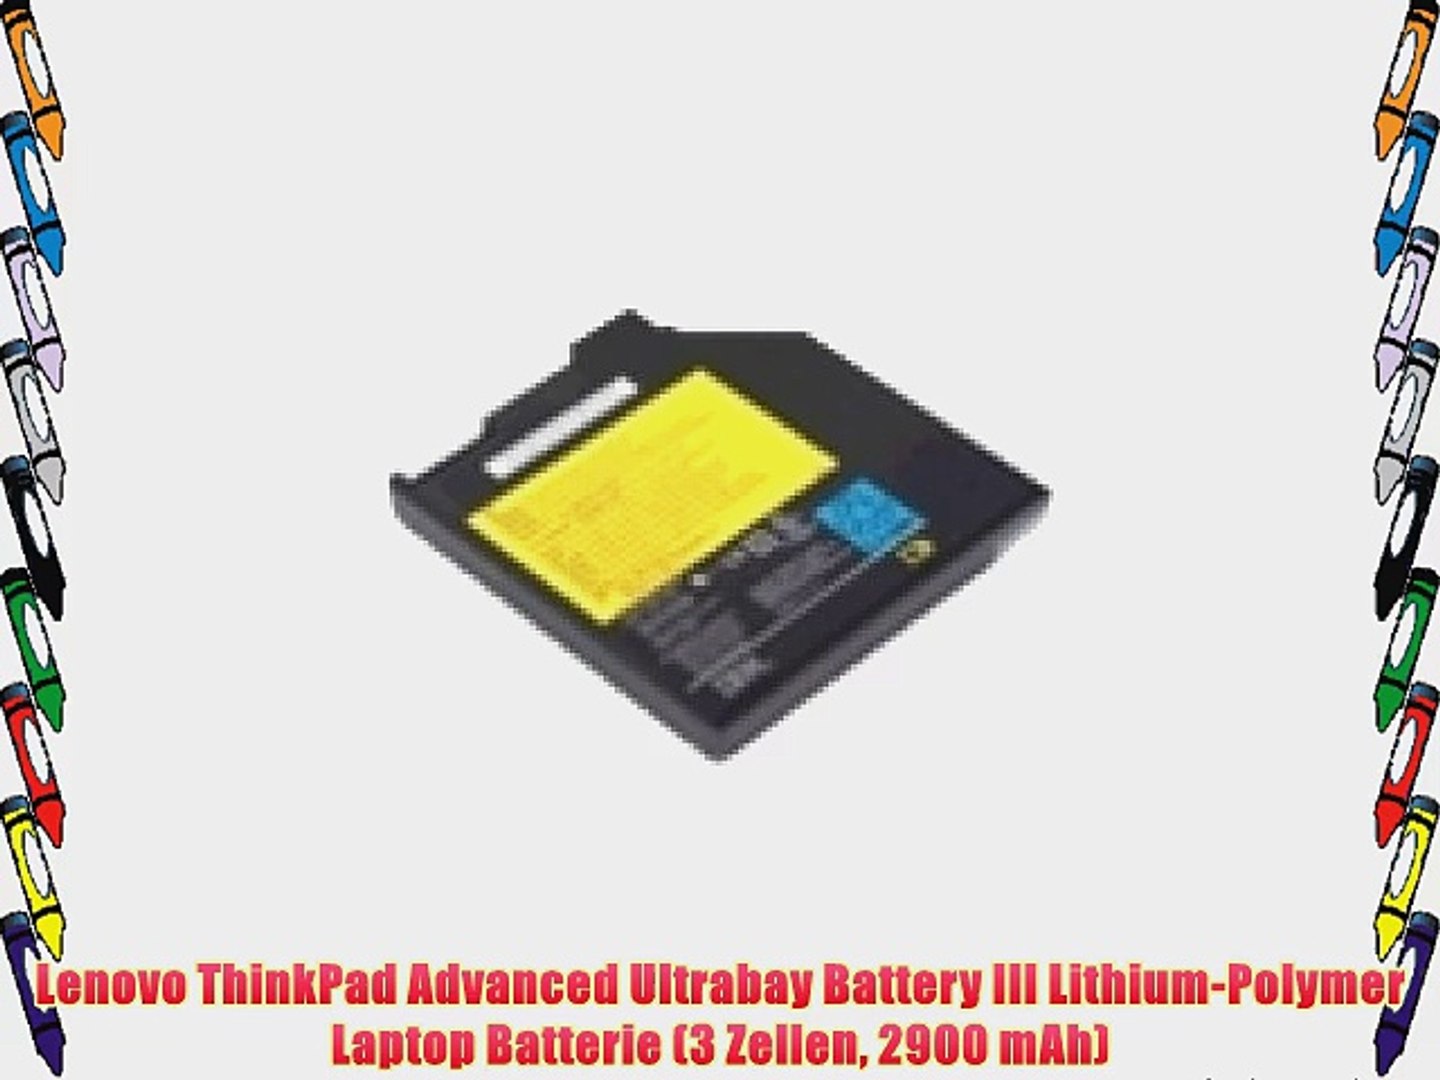 Тип 3 no 57. Аккумулятор вместо CD-ROM Lenovo THINKPAD t430 Ultrabay. AK-430t Lithium-lon Battery 3.7 1350 Mah BBK. Lenovo THINKPAD батарея купить..